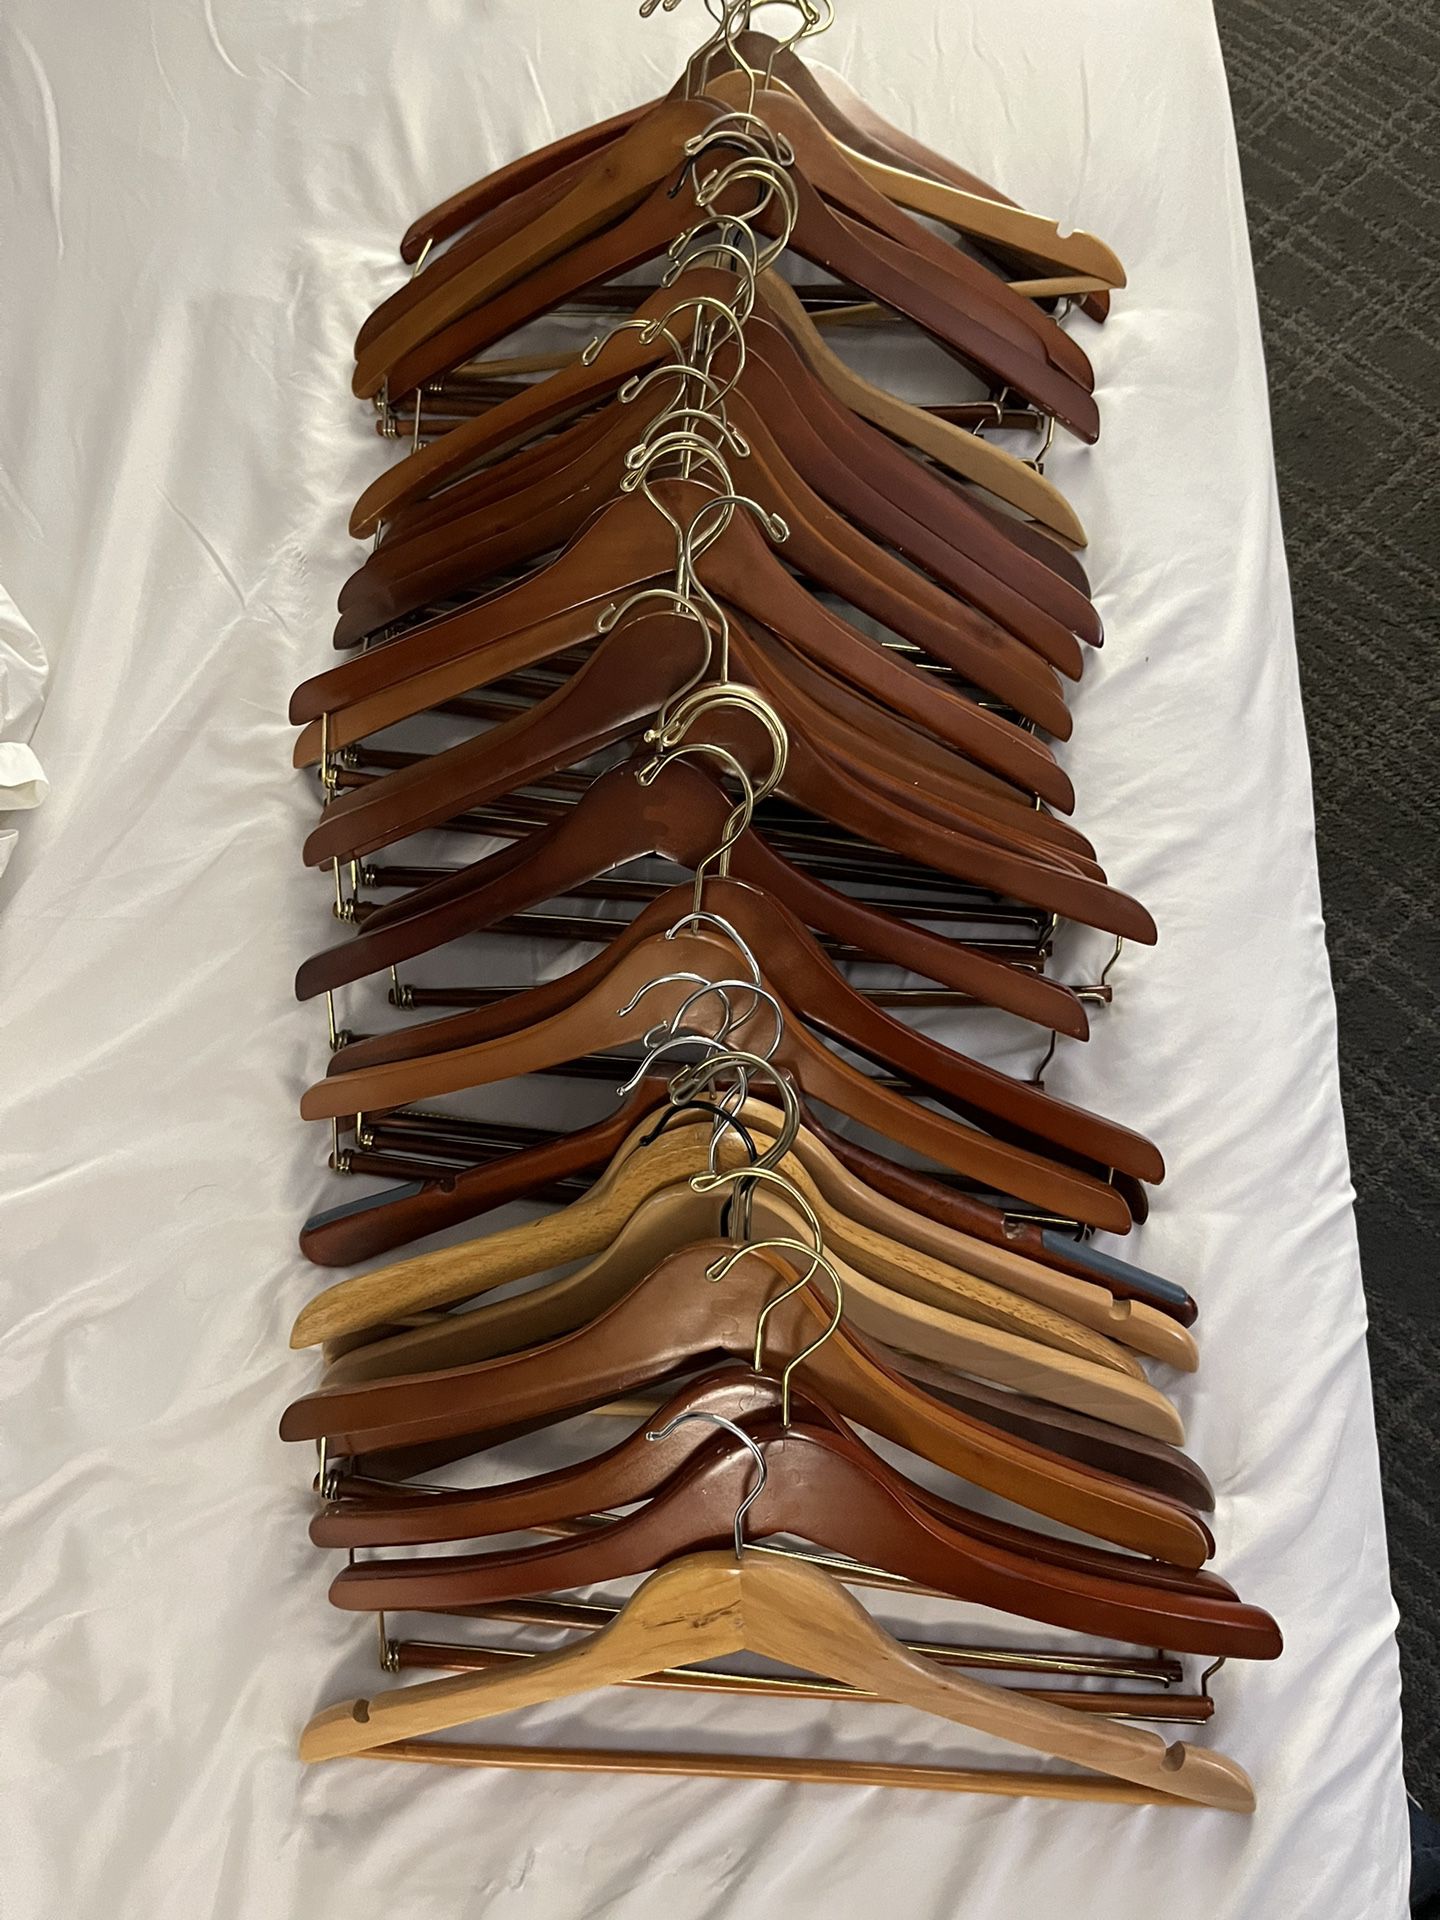 36 Wooden Hangers Like New